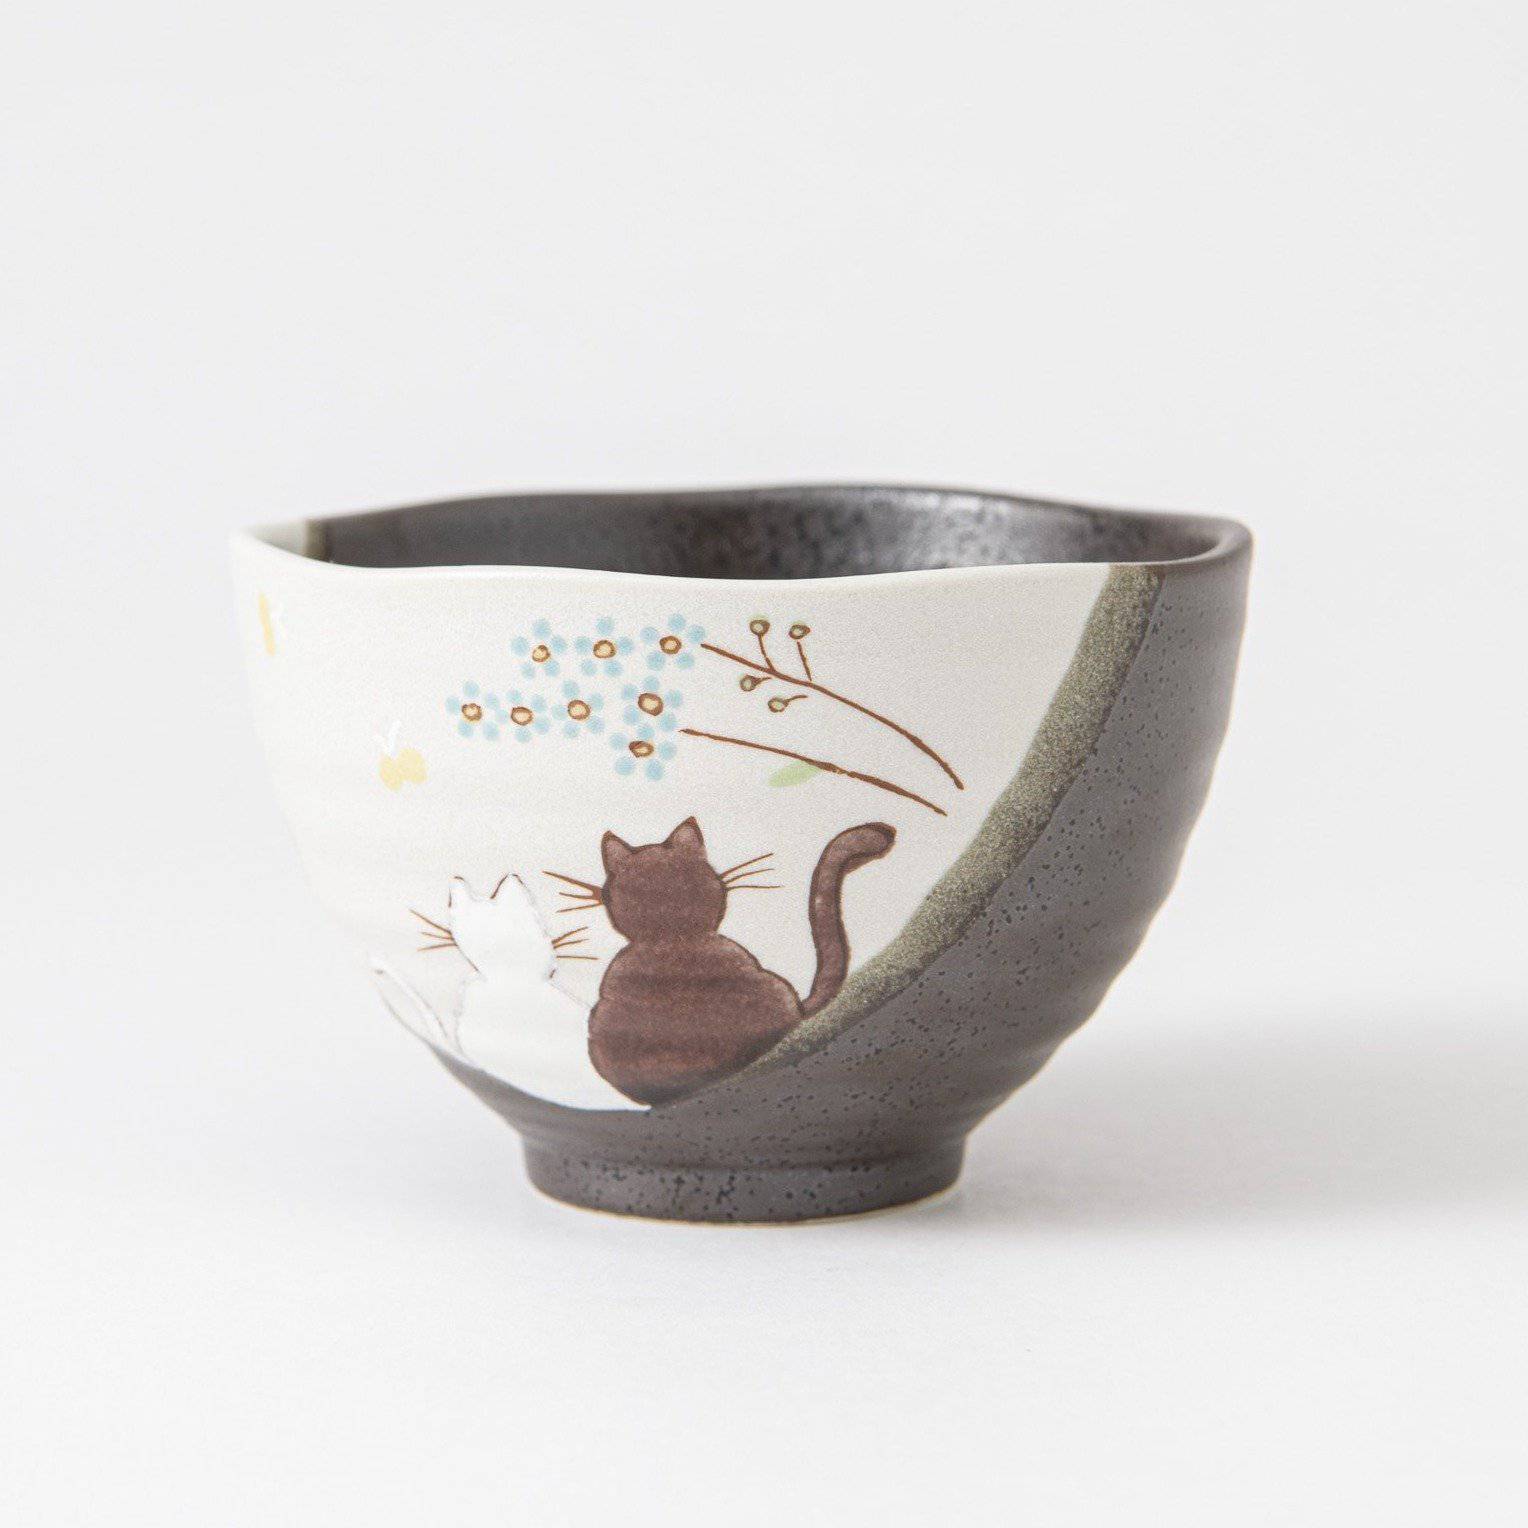 Cat bowl, ceramic yarn bowl, ceramic cat figurine, cat yarn bowl